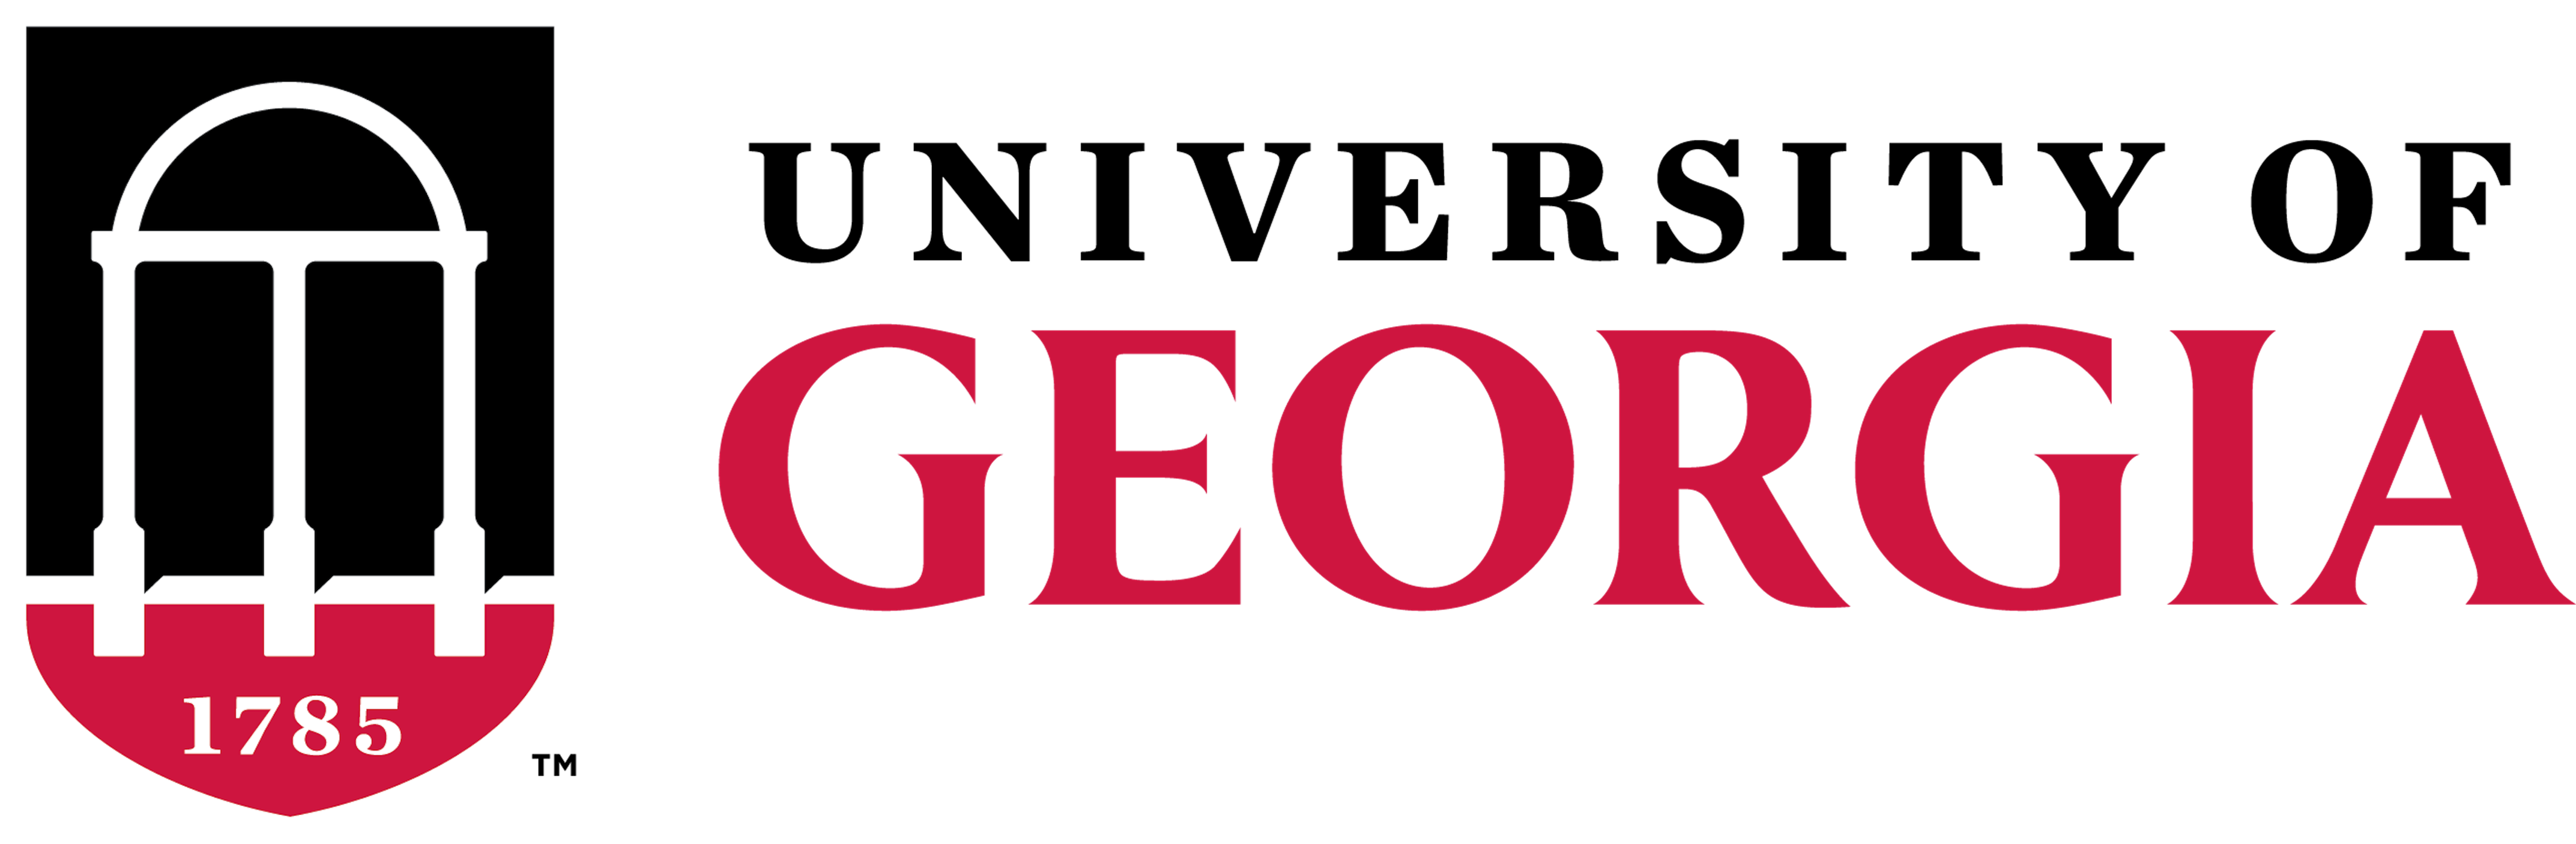 The Univerisity of Georgia Logo